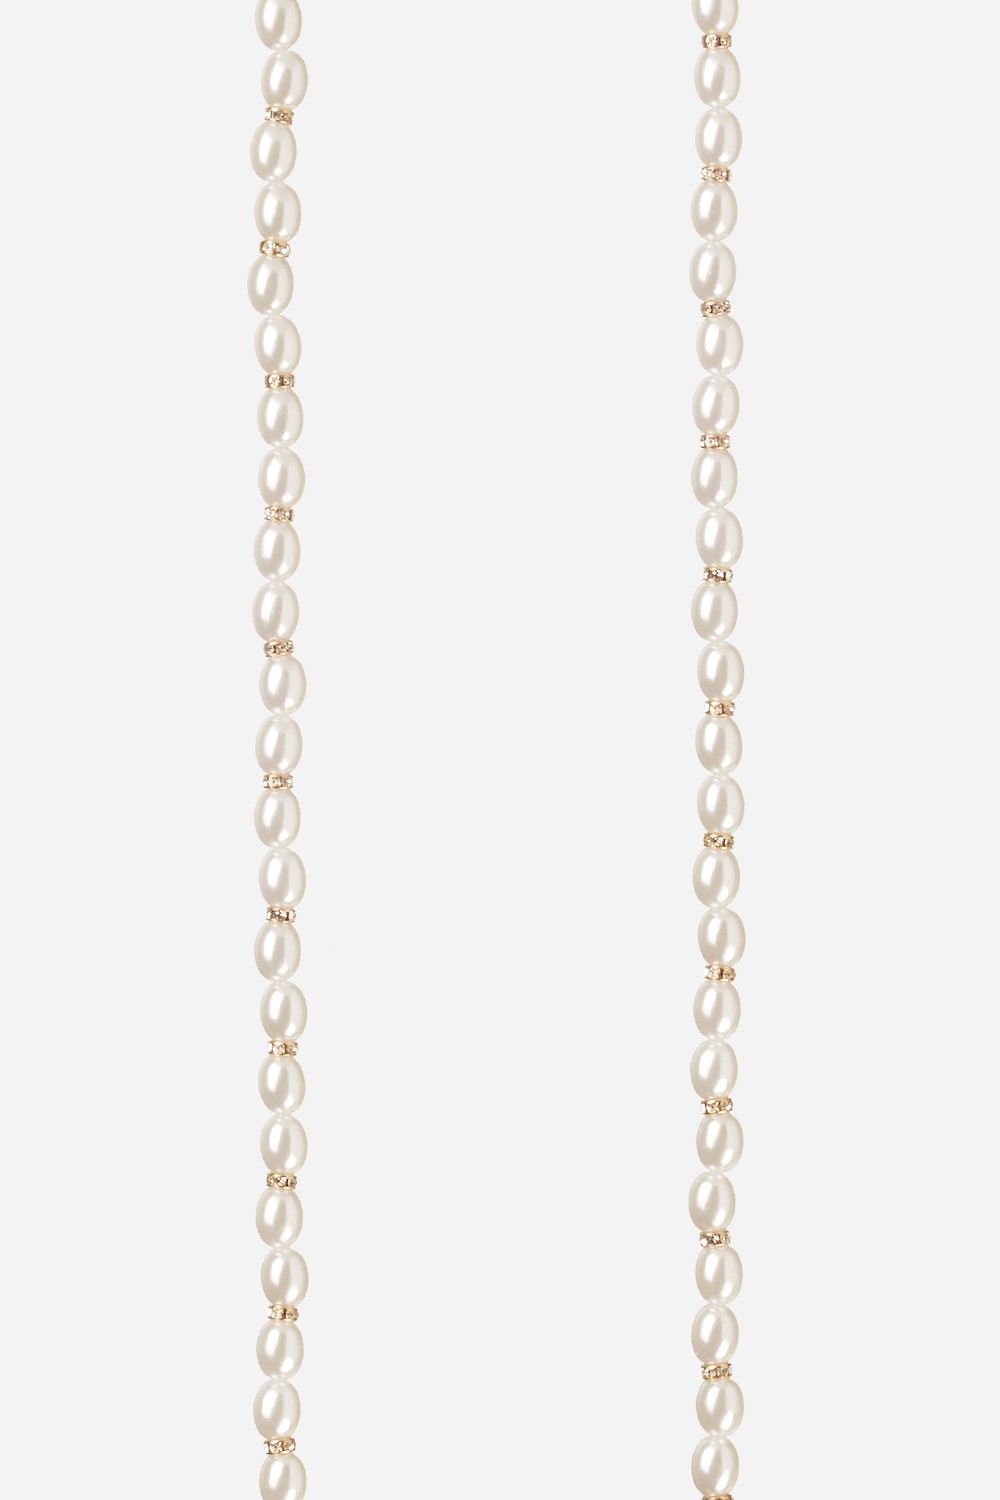 Mareva Long Chain White 120 cm